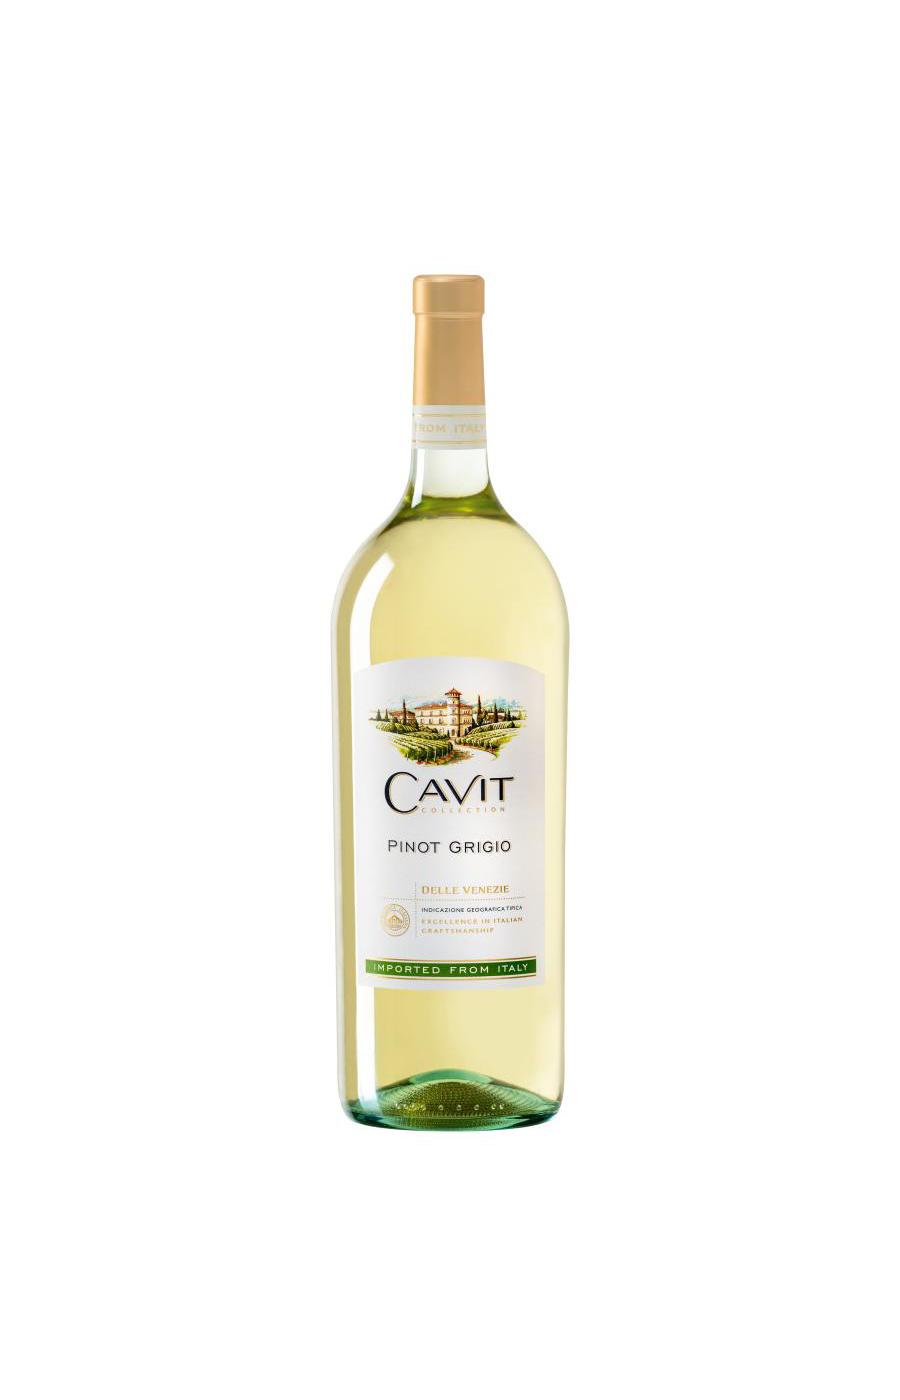 Cavit Pinot Grigio White Wine; image 1 of 2